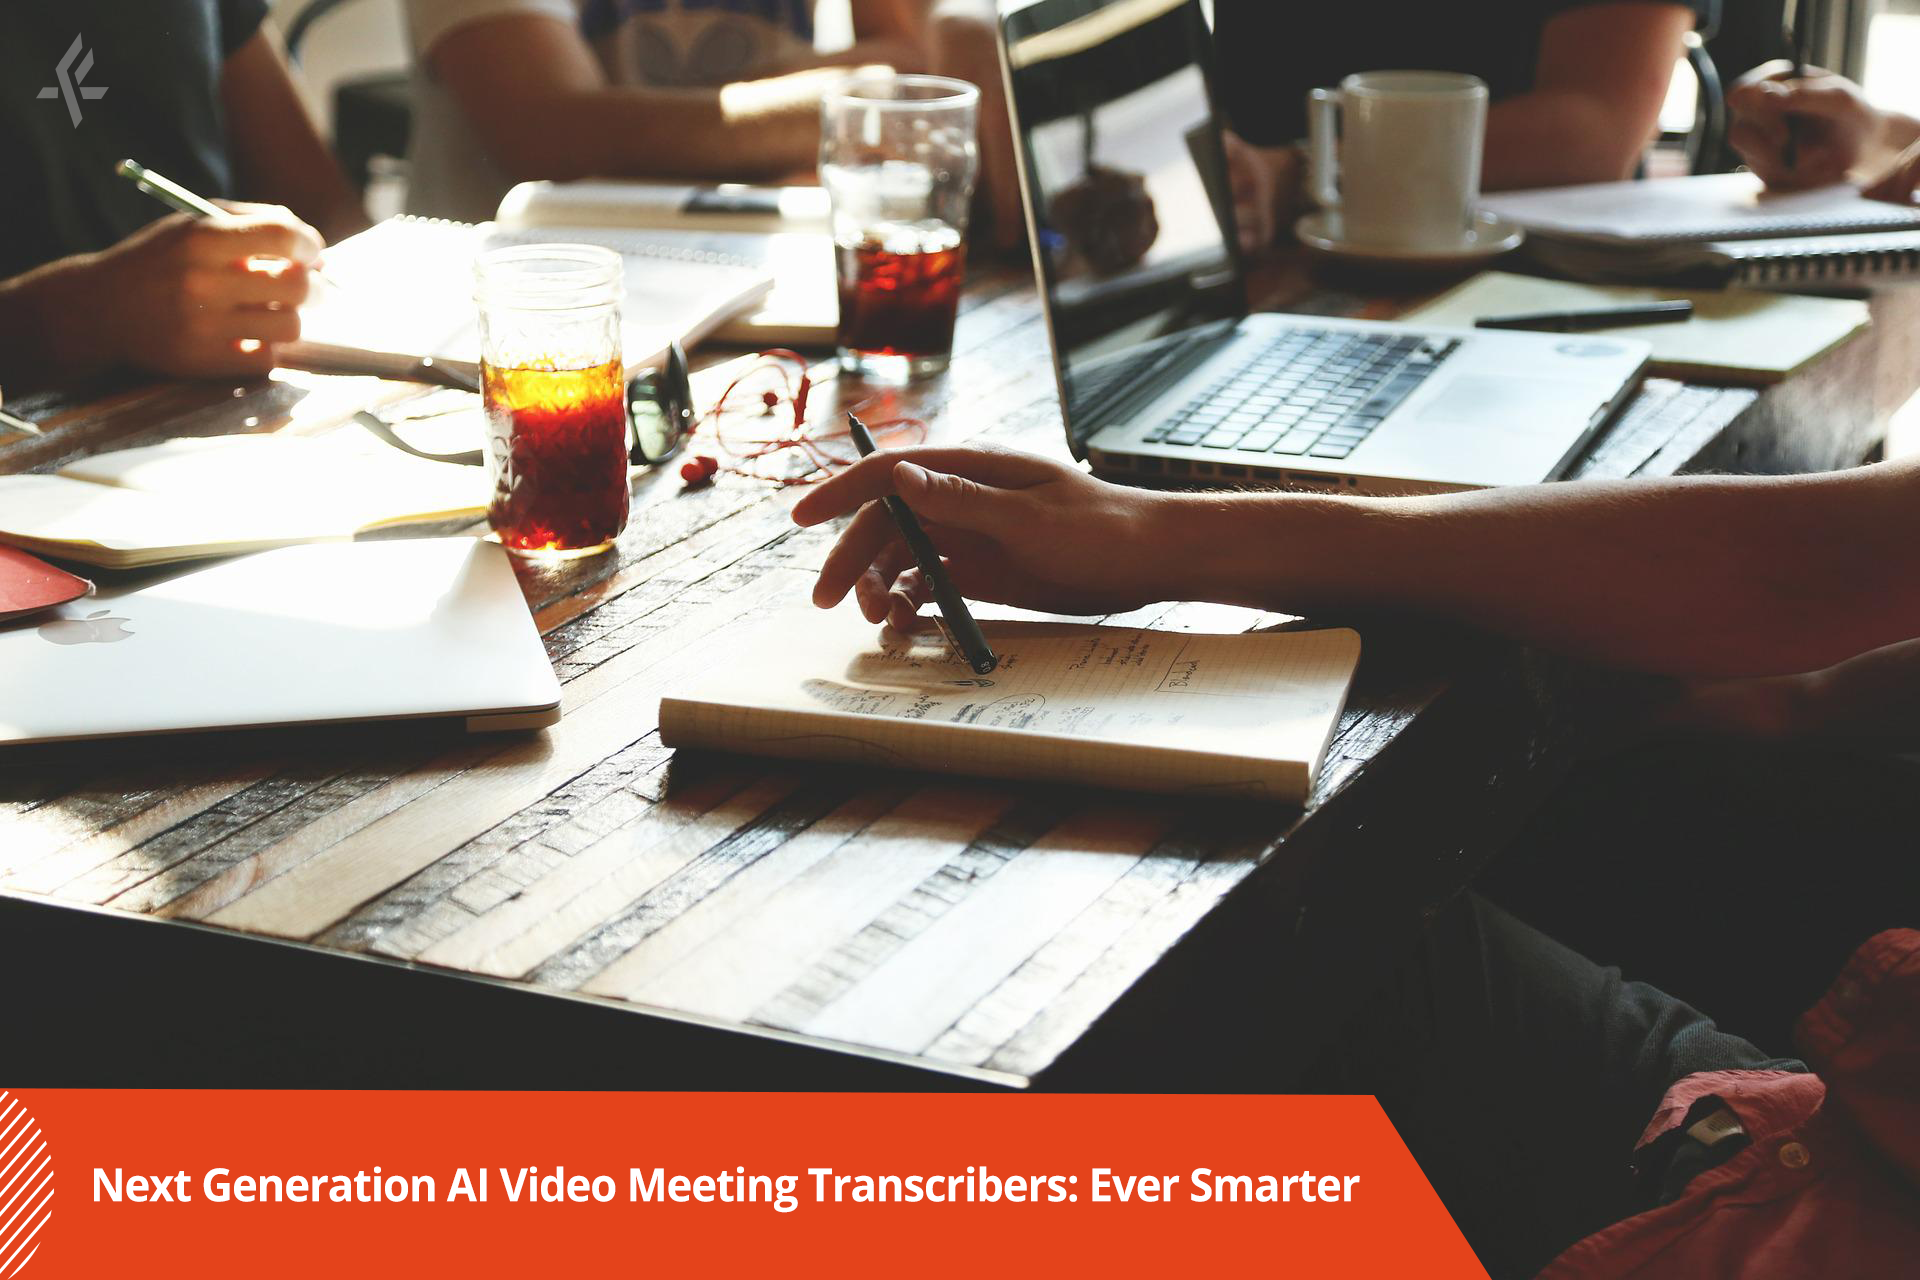 Next Generation, AI Video Meeting Transcribers: Ever Smarter